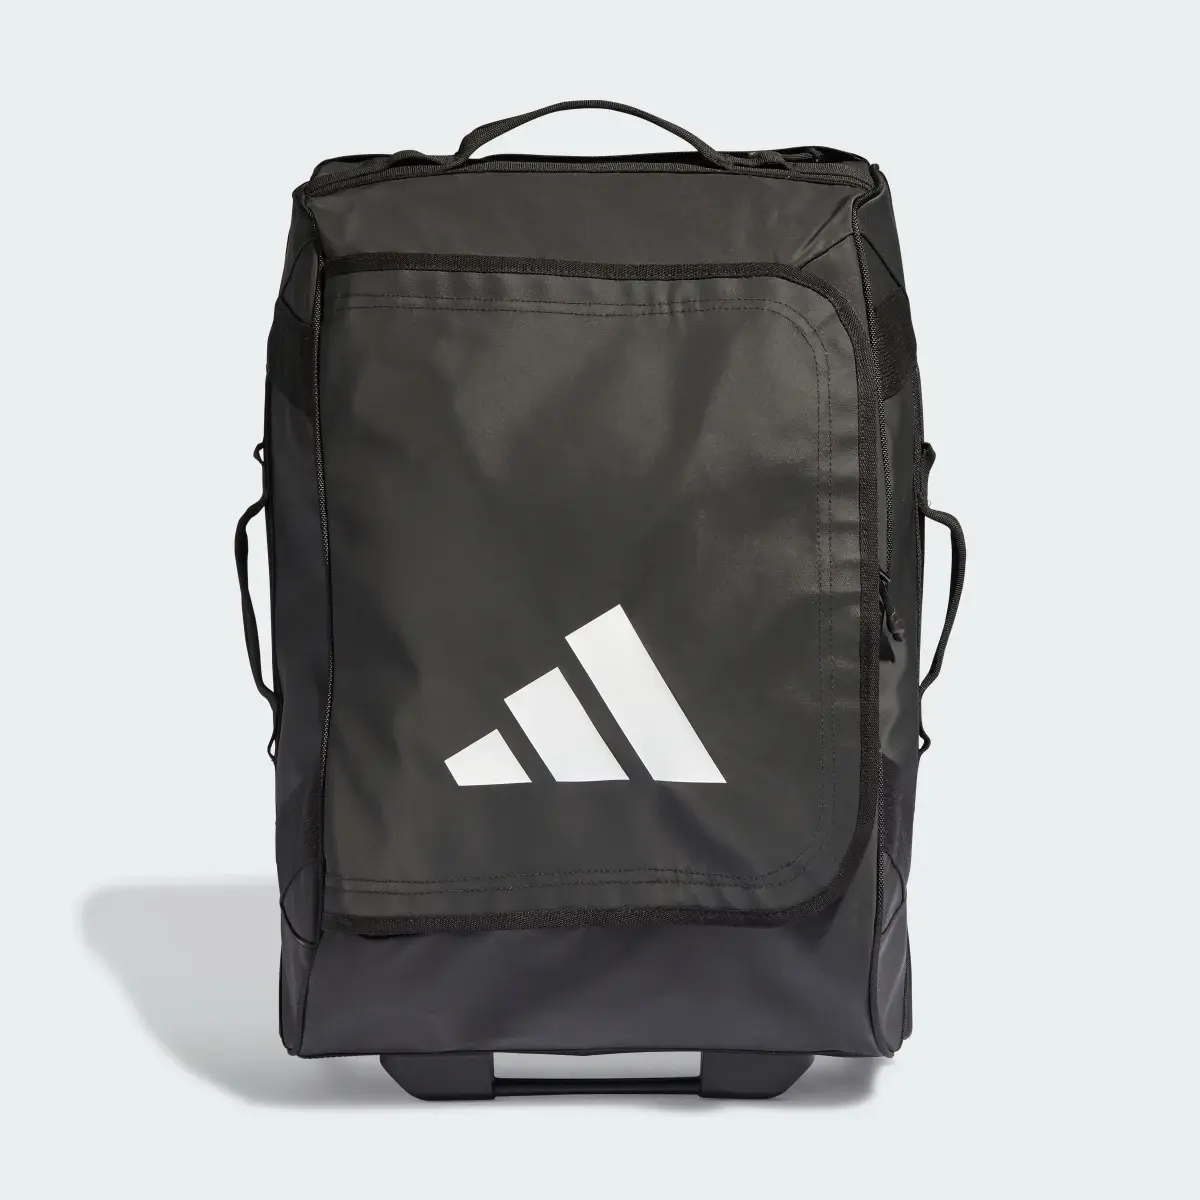 Adidas Roller Bag Small. 2